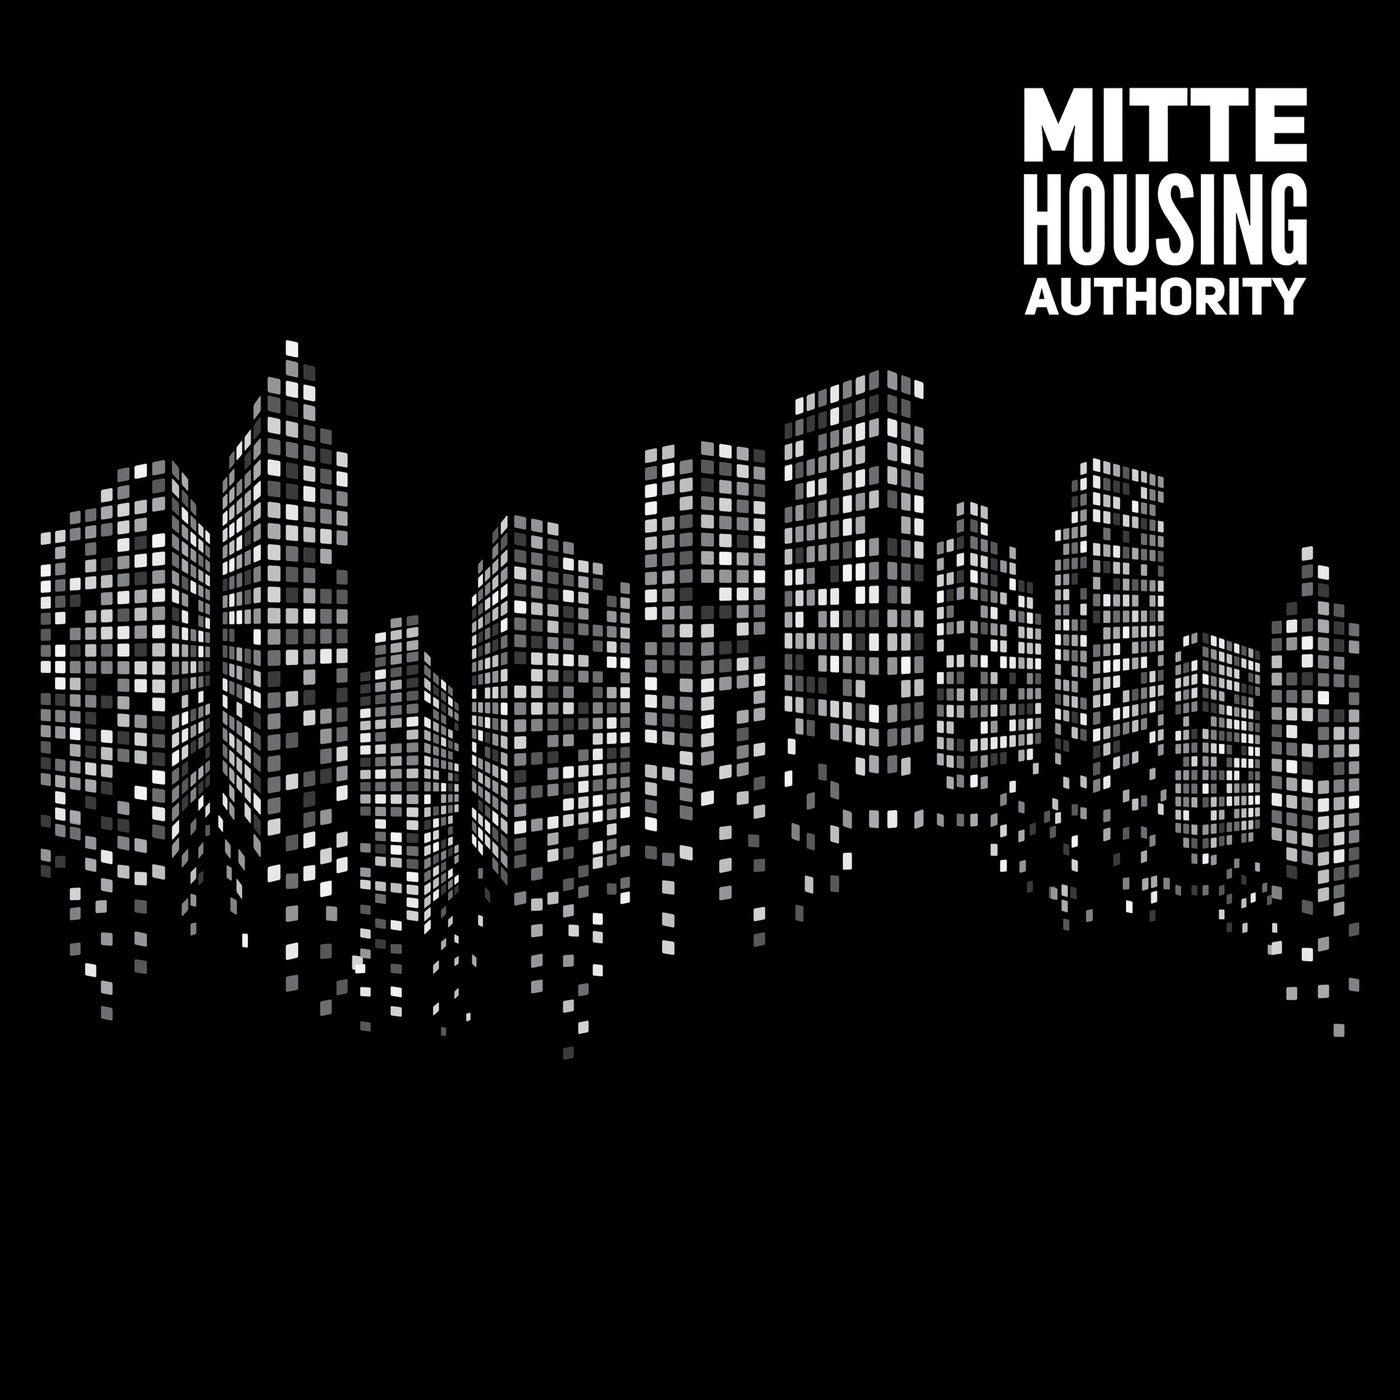 Mitte Housing Authority